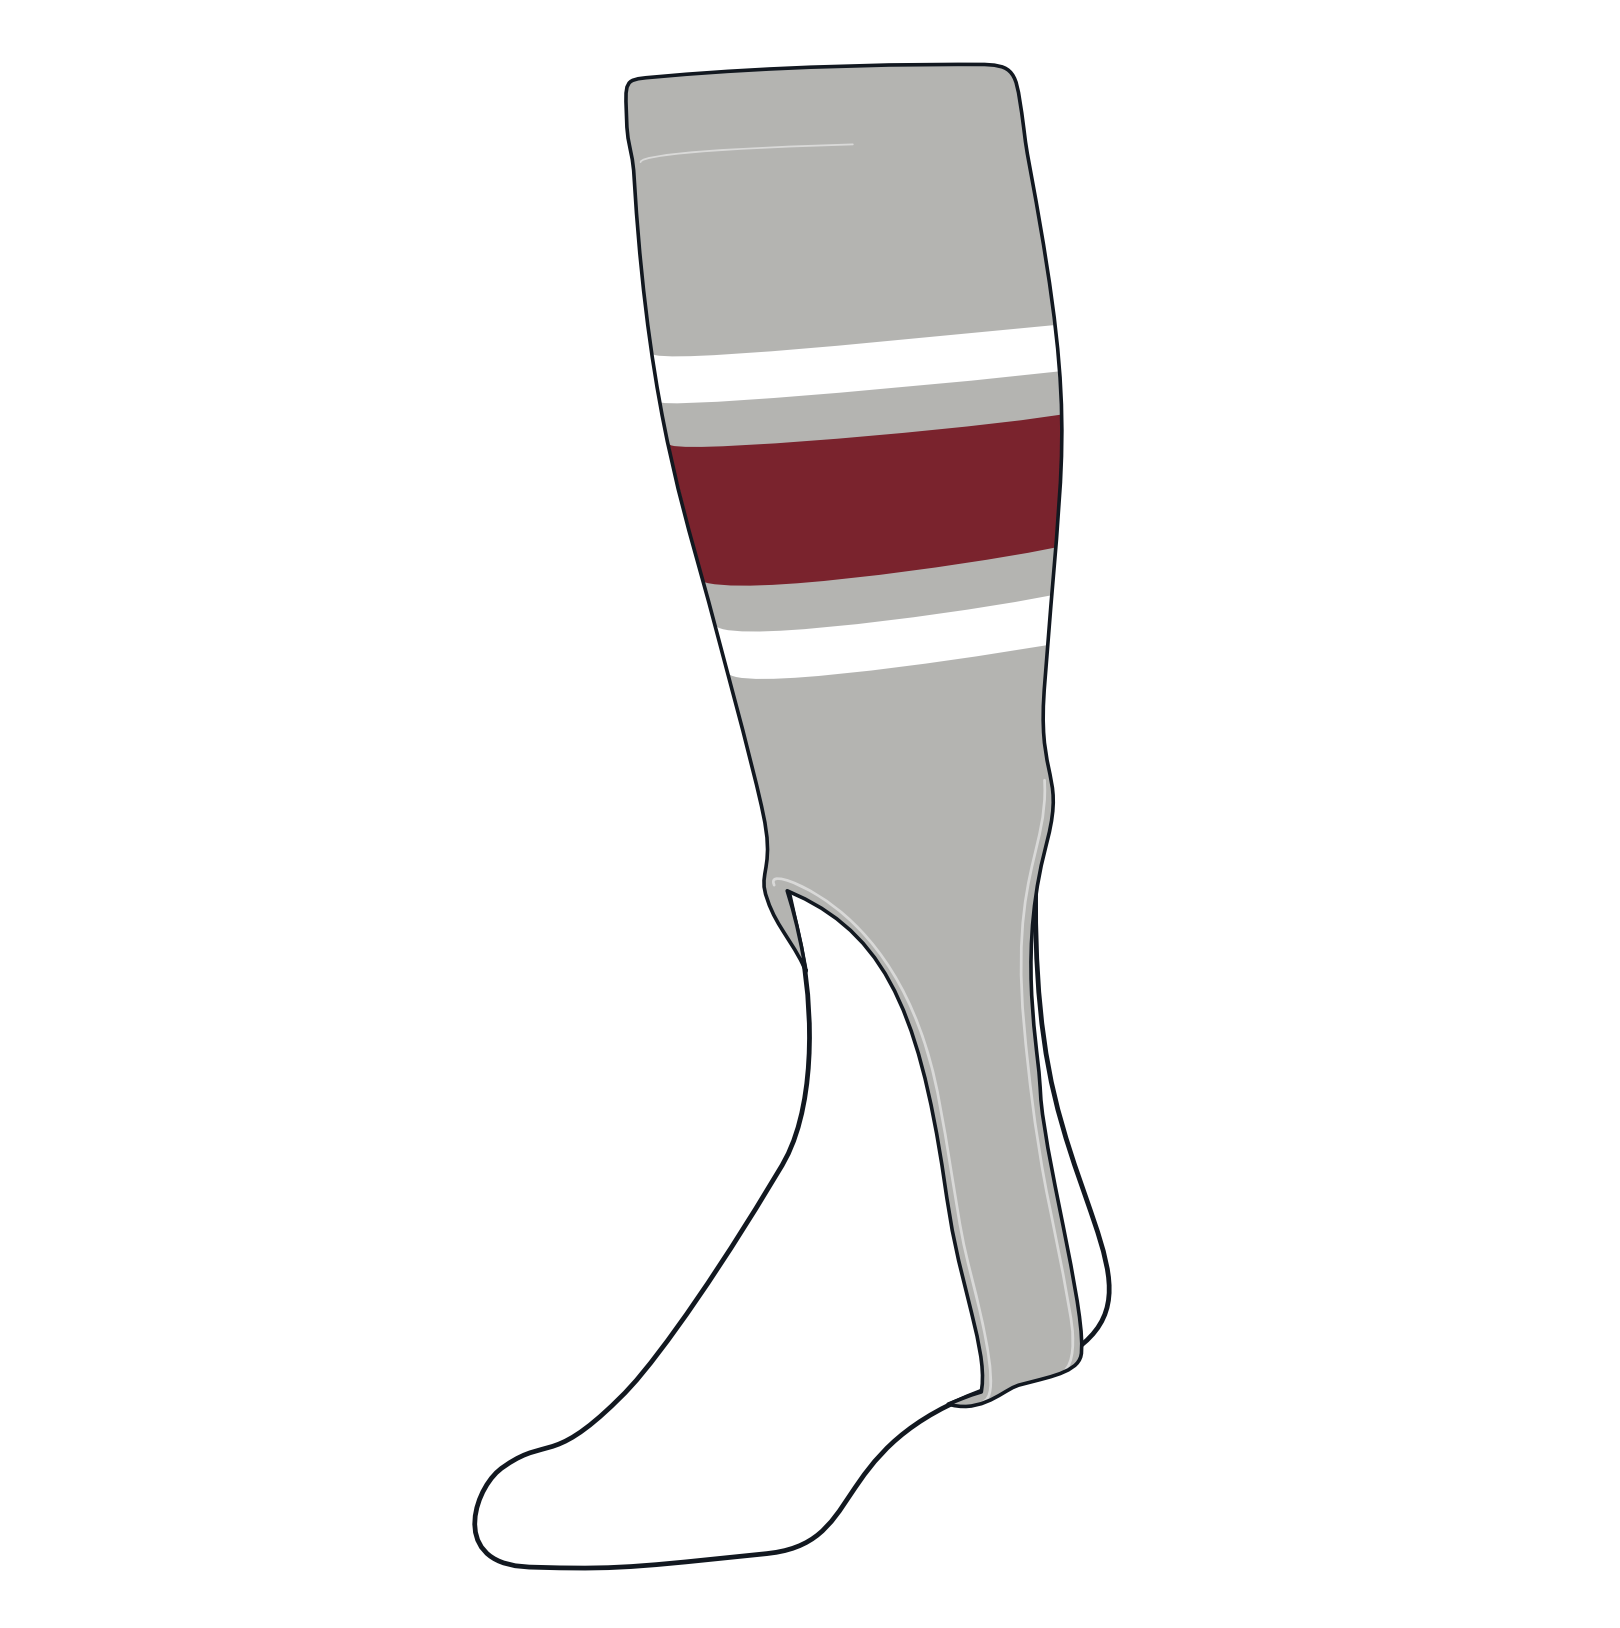 Swanq Stars and Stripes USA Flag Baseball Stirrup Knee High Socks made by  TCK